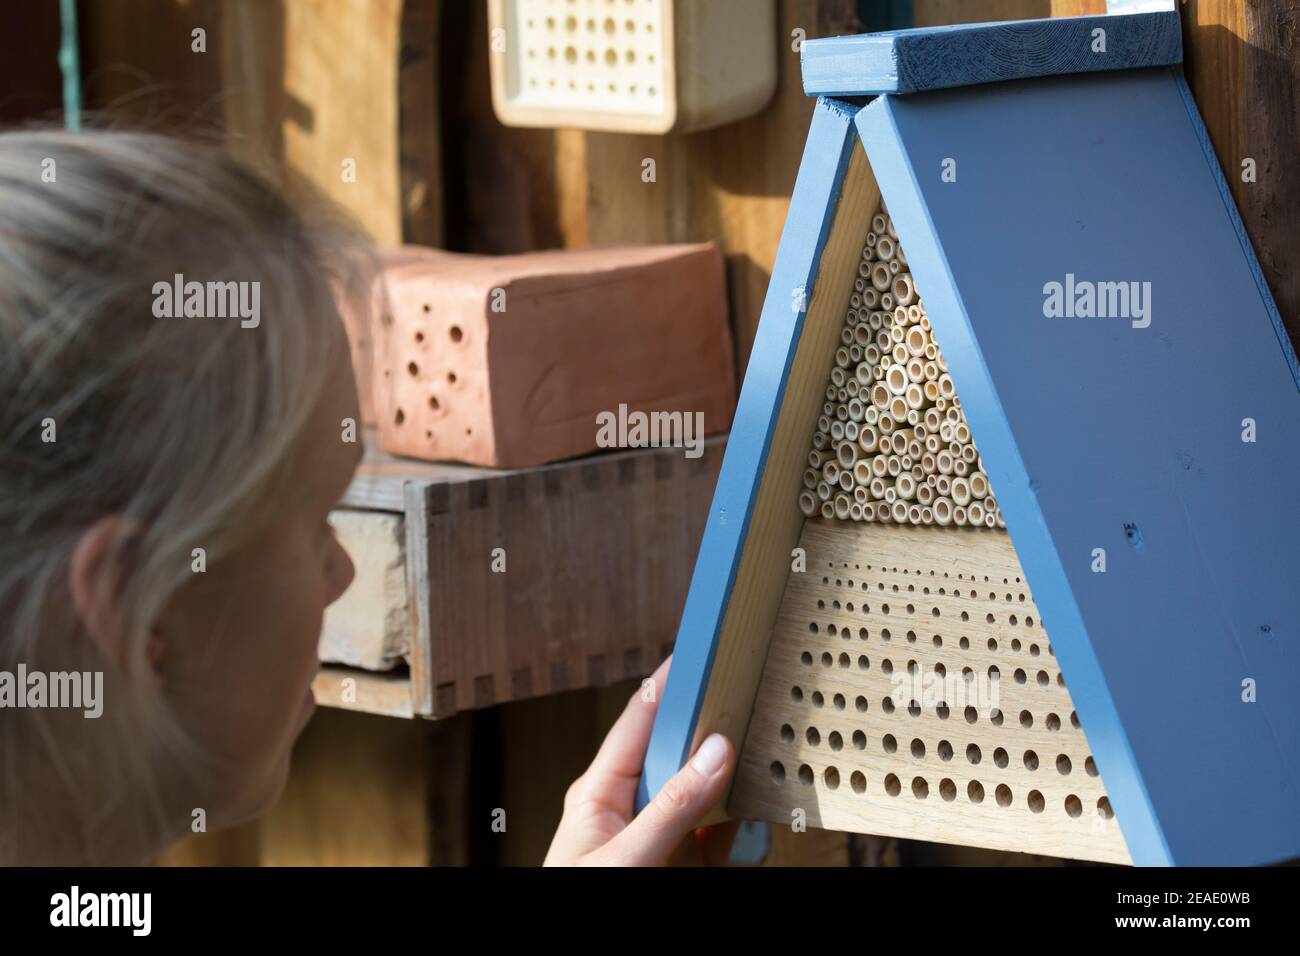 Beobachtung an Wildbienen-Nisthilfen, junge Frau beobachtet Wildbienen an Nisthilfen. Wildbienen-Nisthilfen, Wildbienen-Nisthilfe selbermachen, selber Foto Stock